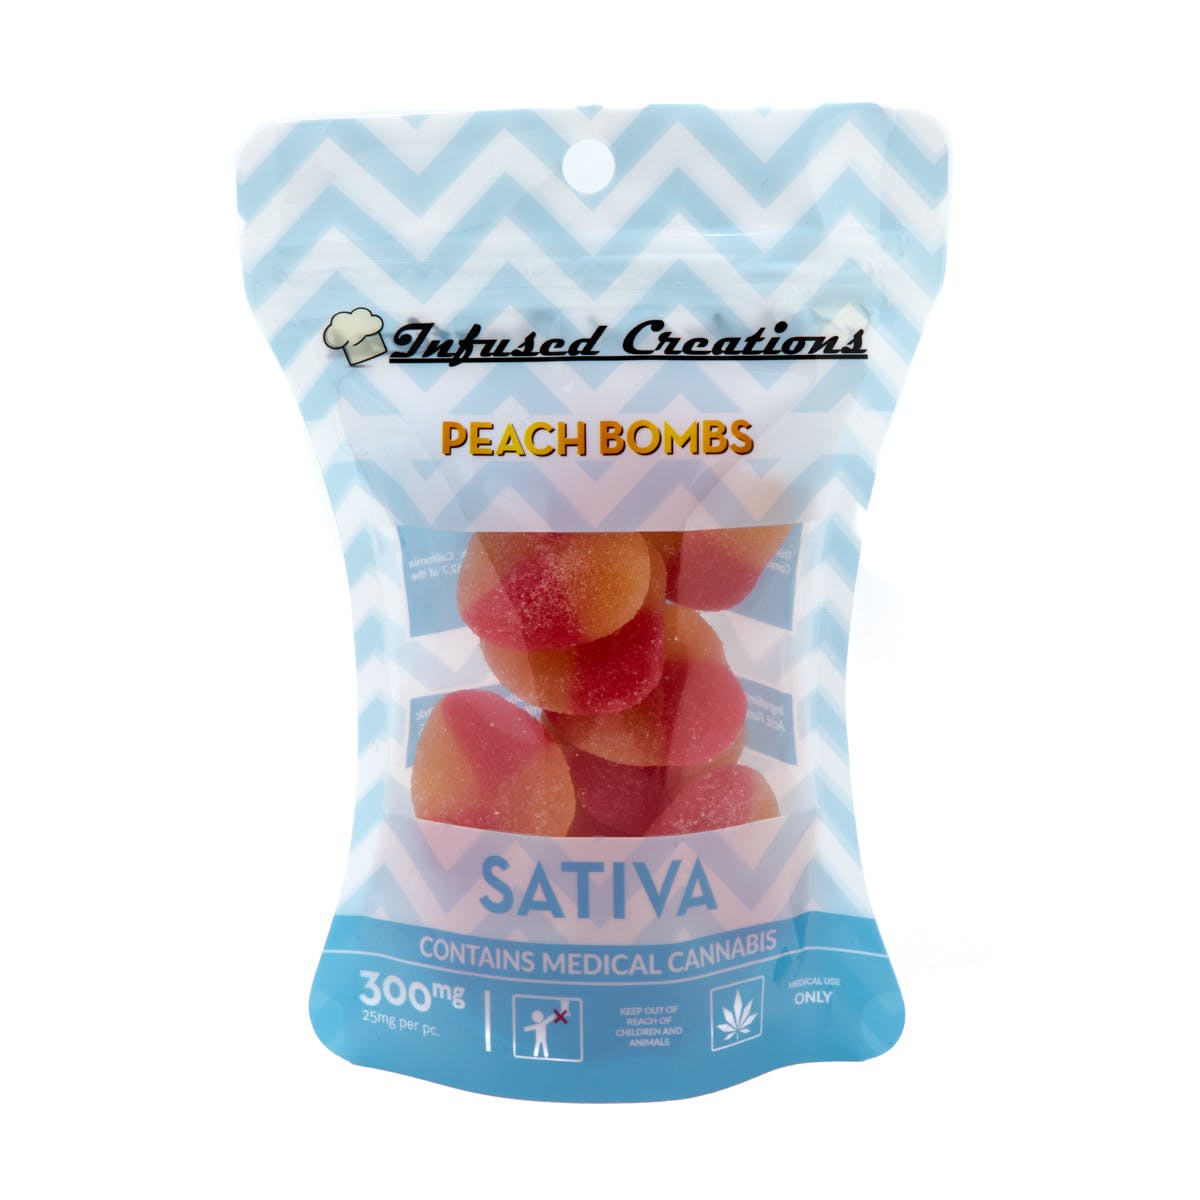 Peach Bombs Sativa, 300mg